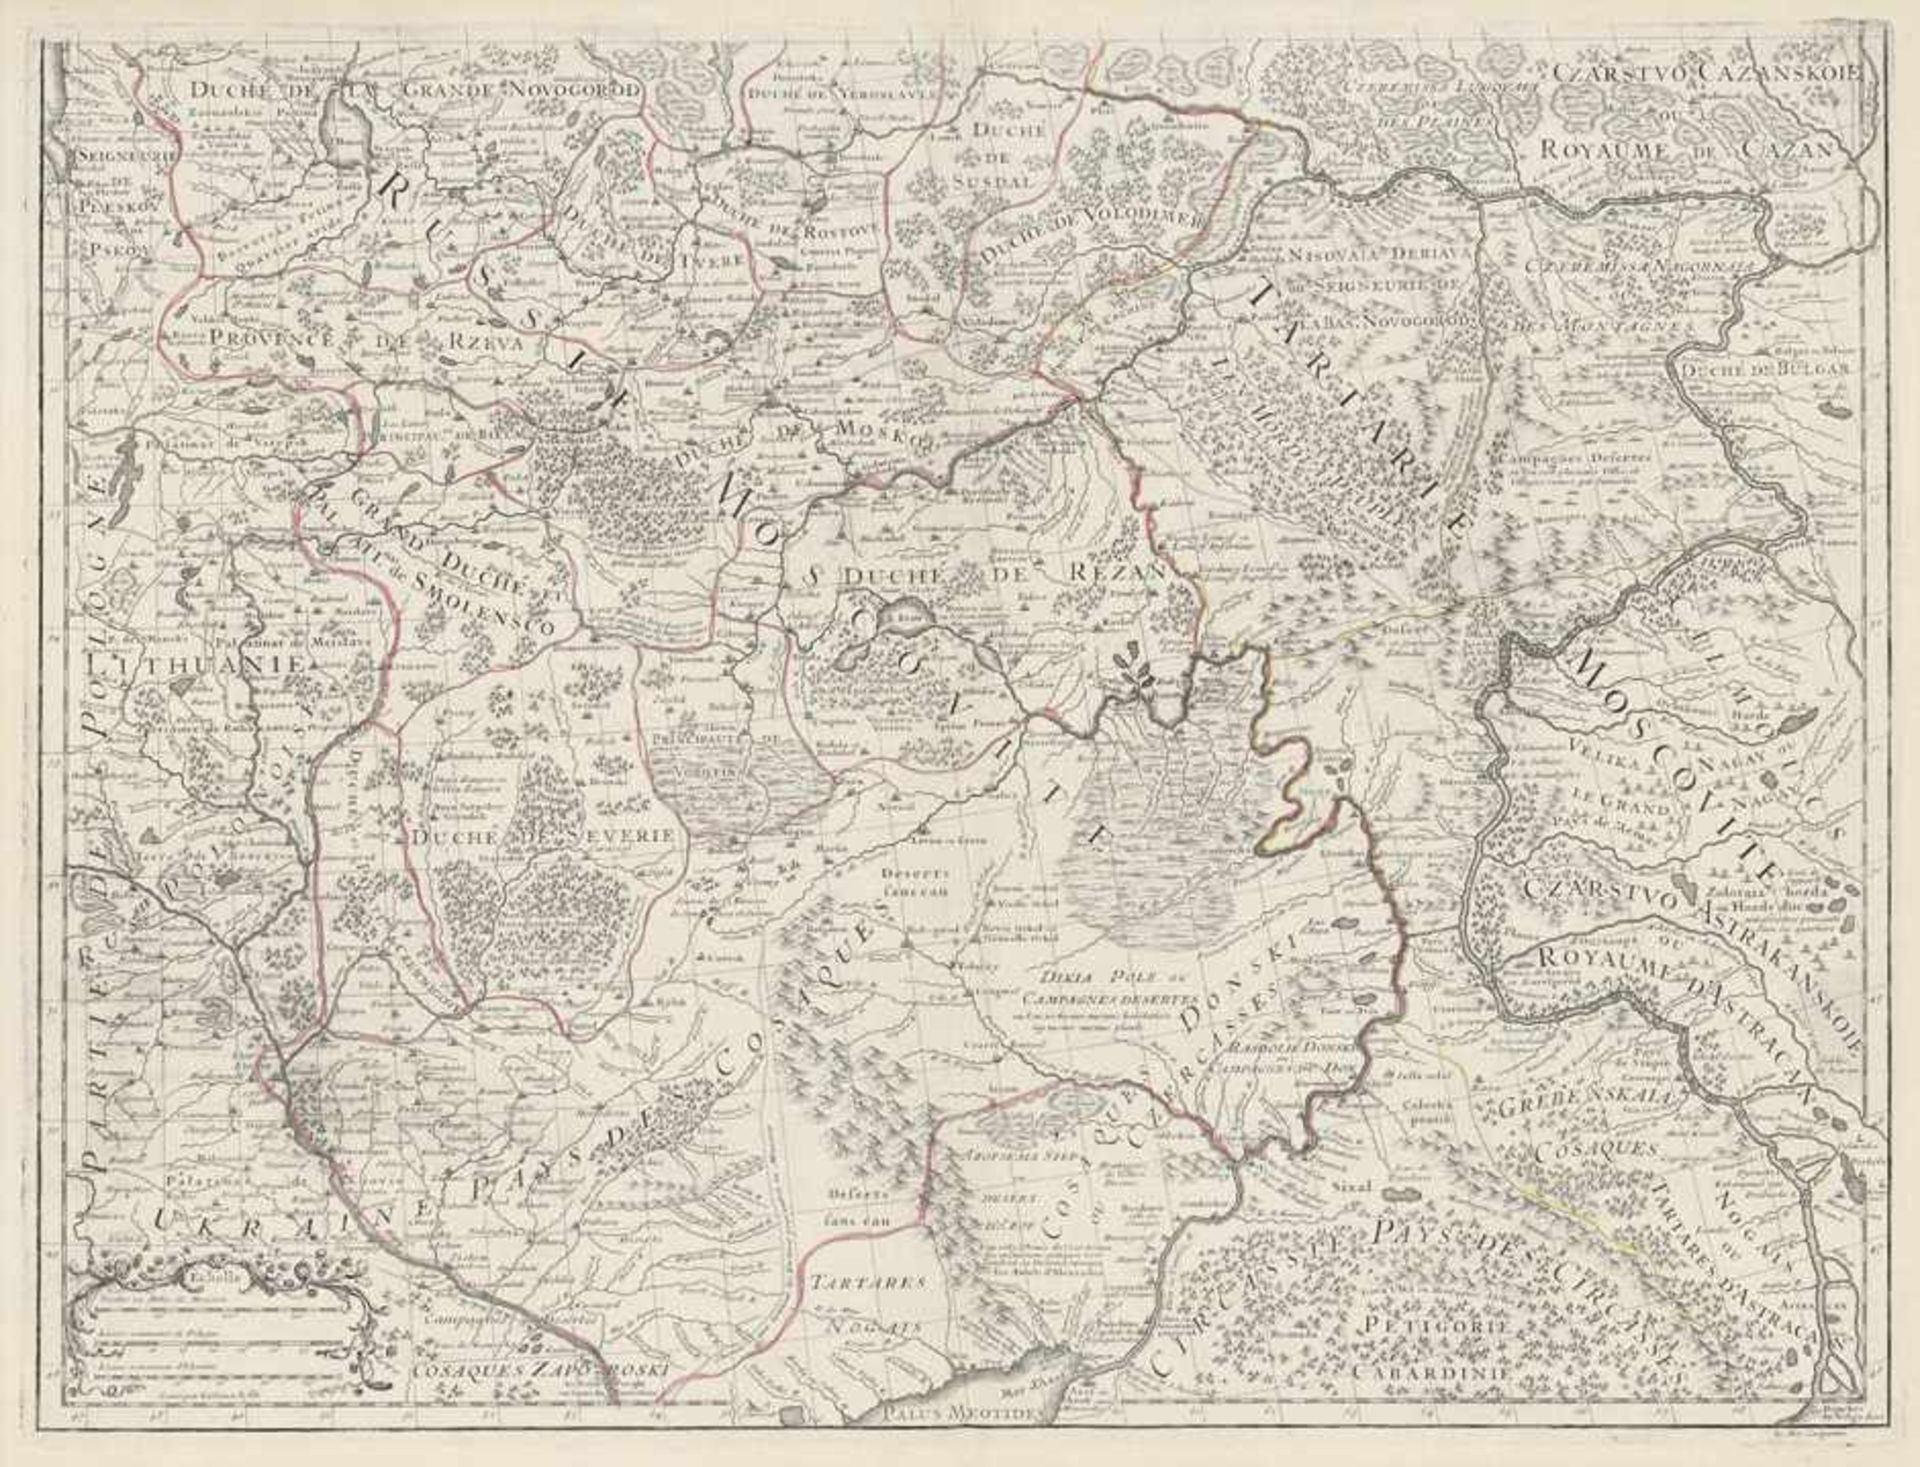 L'Isle, Guillaume de: Carte de Moscovie L'Isle, Guillaume de. Carte de Moscovie. Southern section.